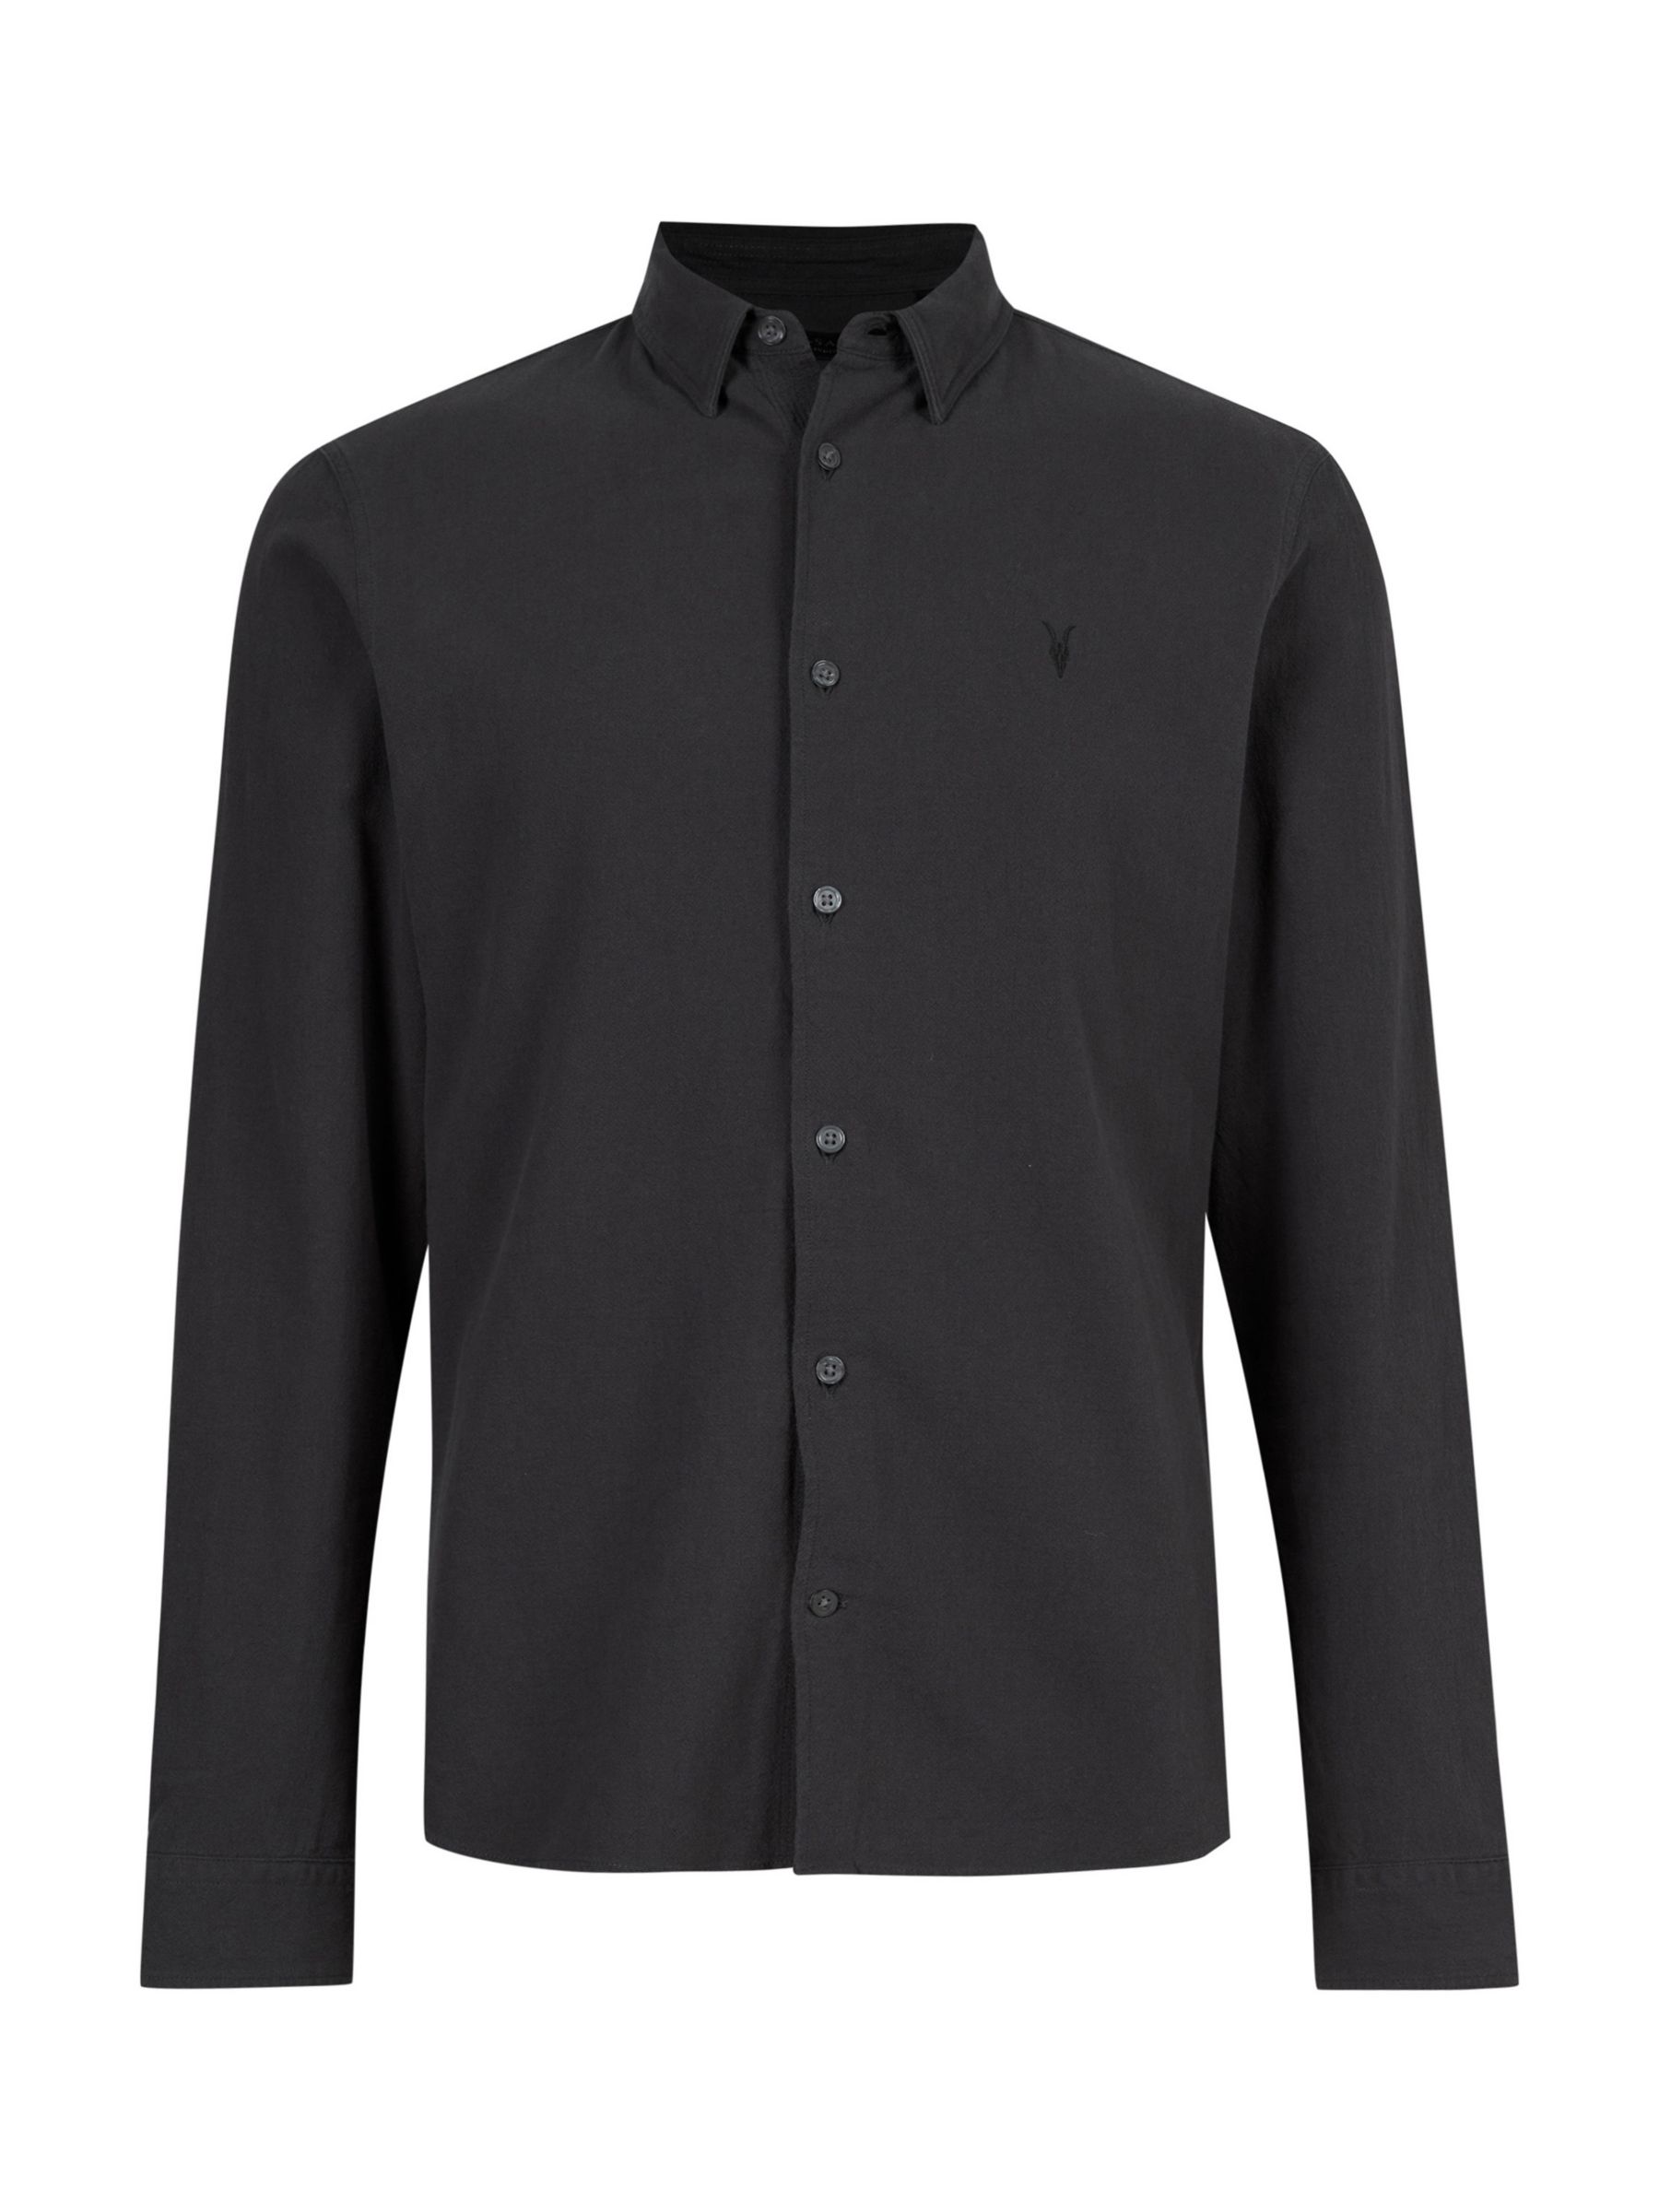 AllSaints Lovell Slim Fit Long Sleeve Shirt at John Lewis & Partners